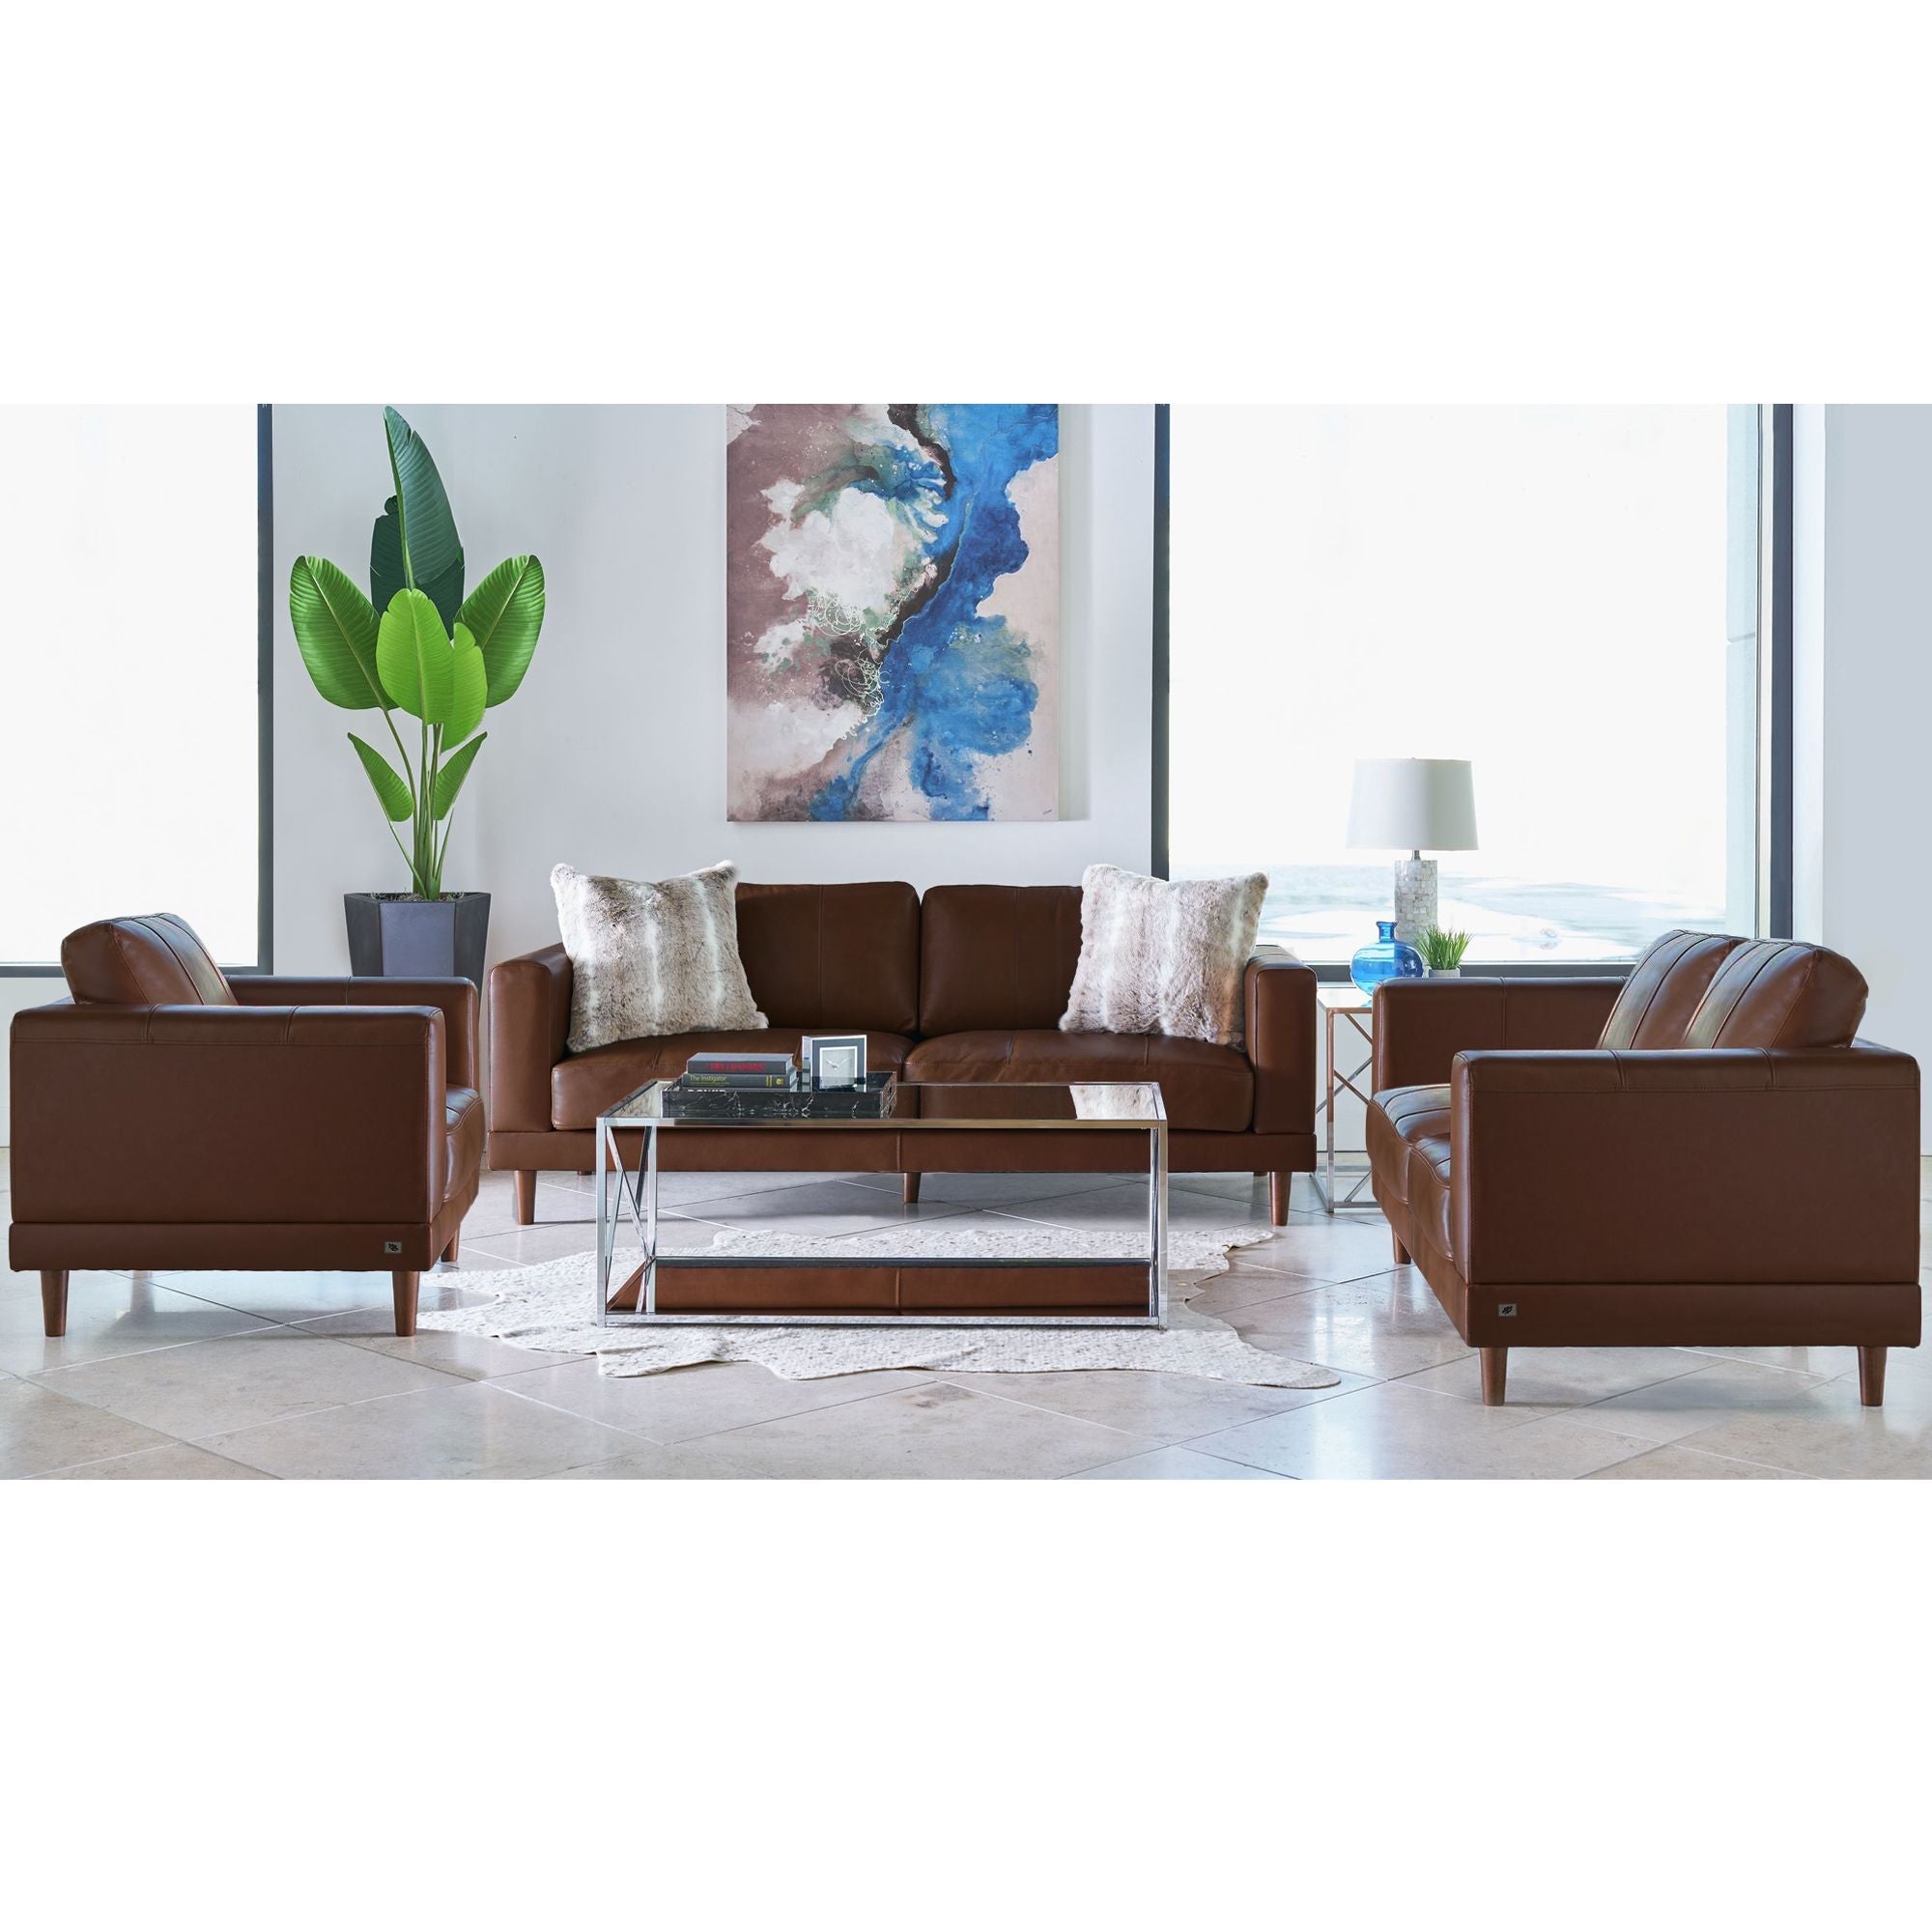 Hampton Leather Fiero Chestnut 3 Seater Sofa (8781984399681)